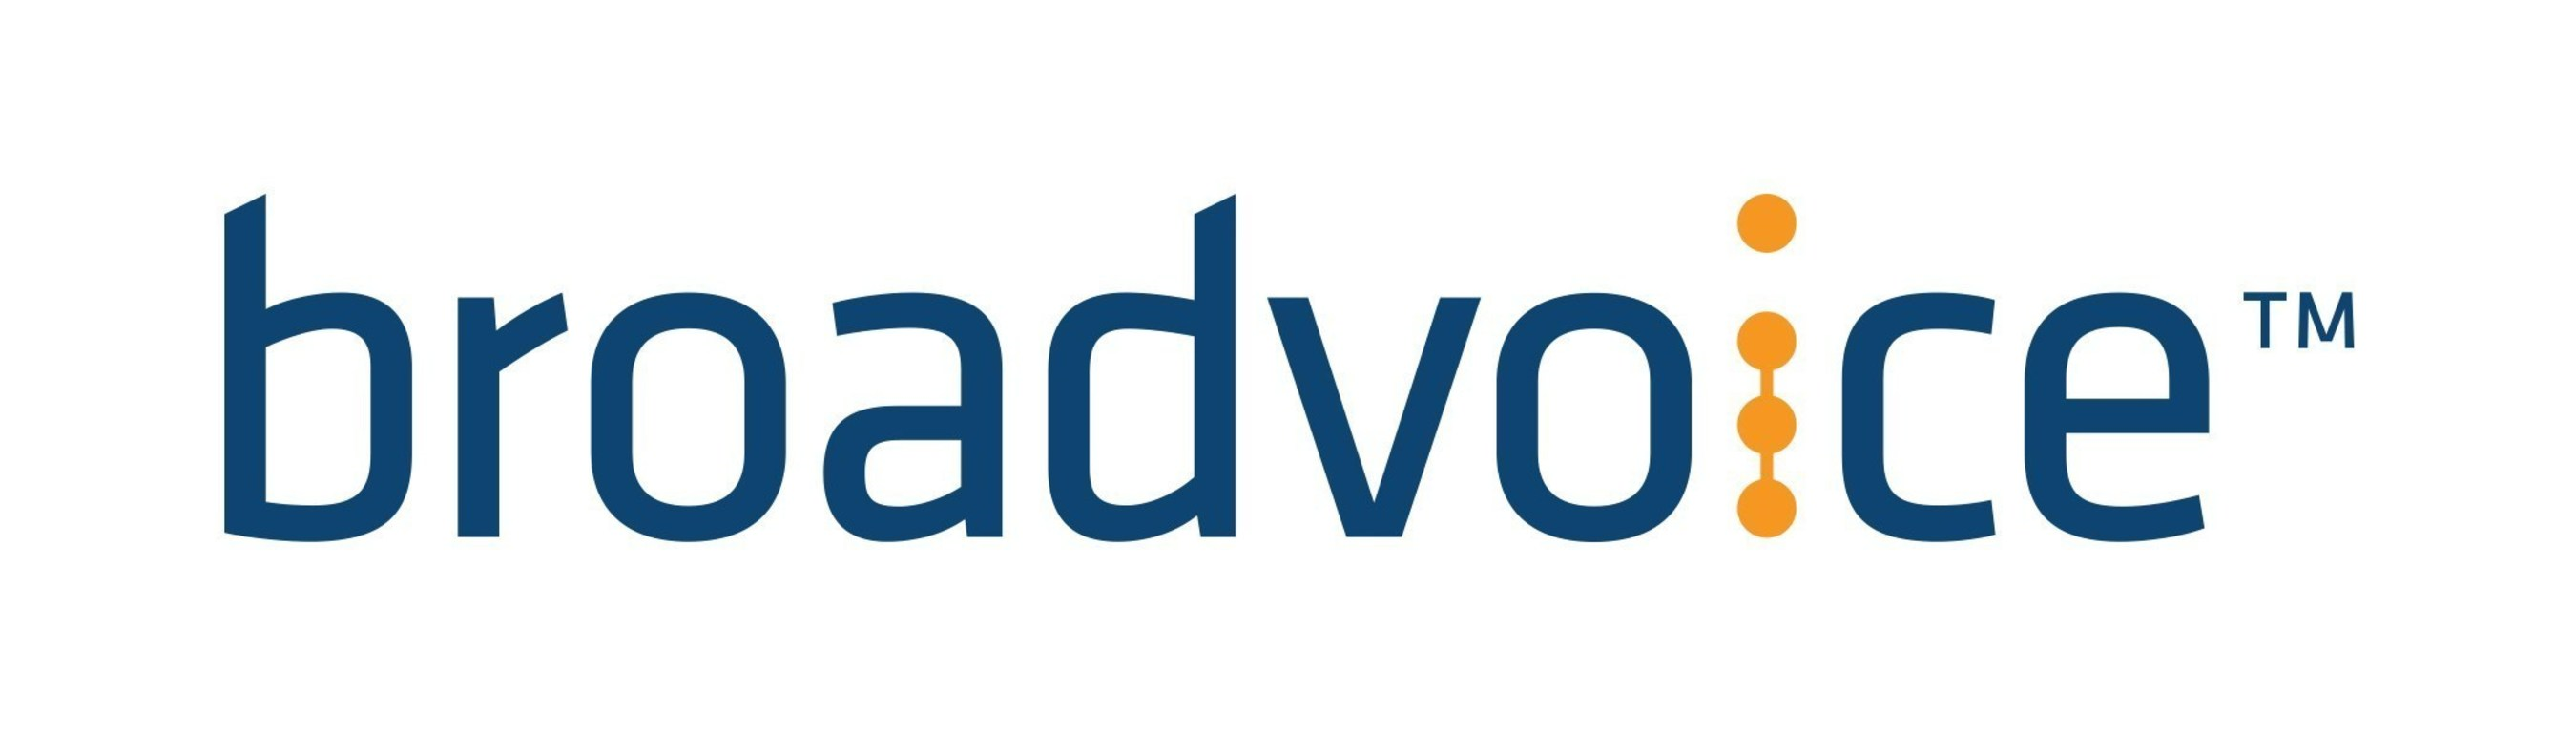 Broadvoice logo-1